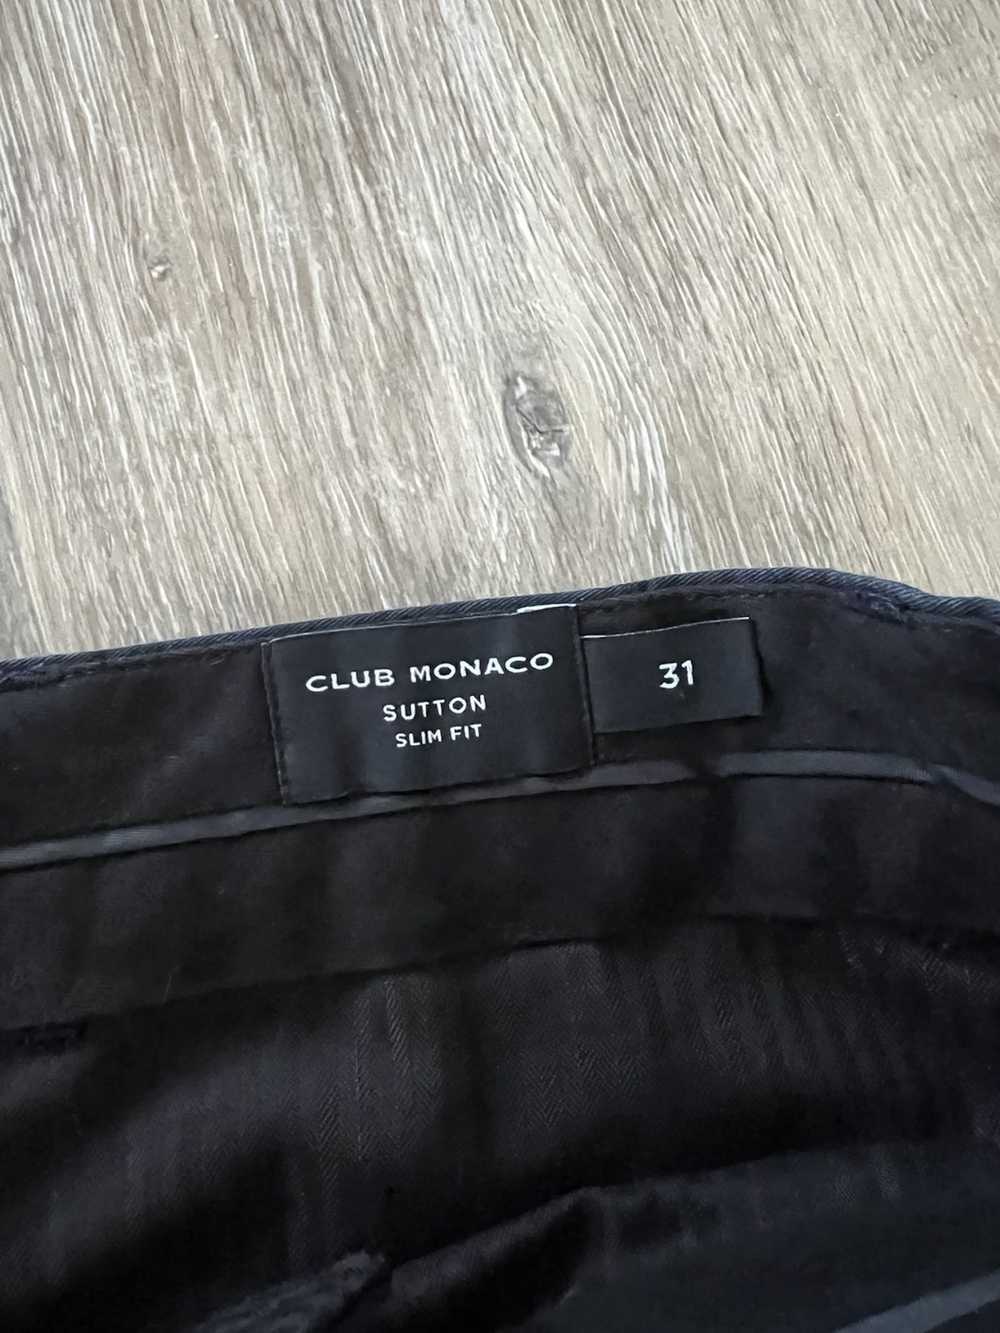 Club Monaco Sutton Stretch Cotton Dress Pants - image 4